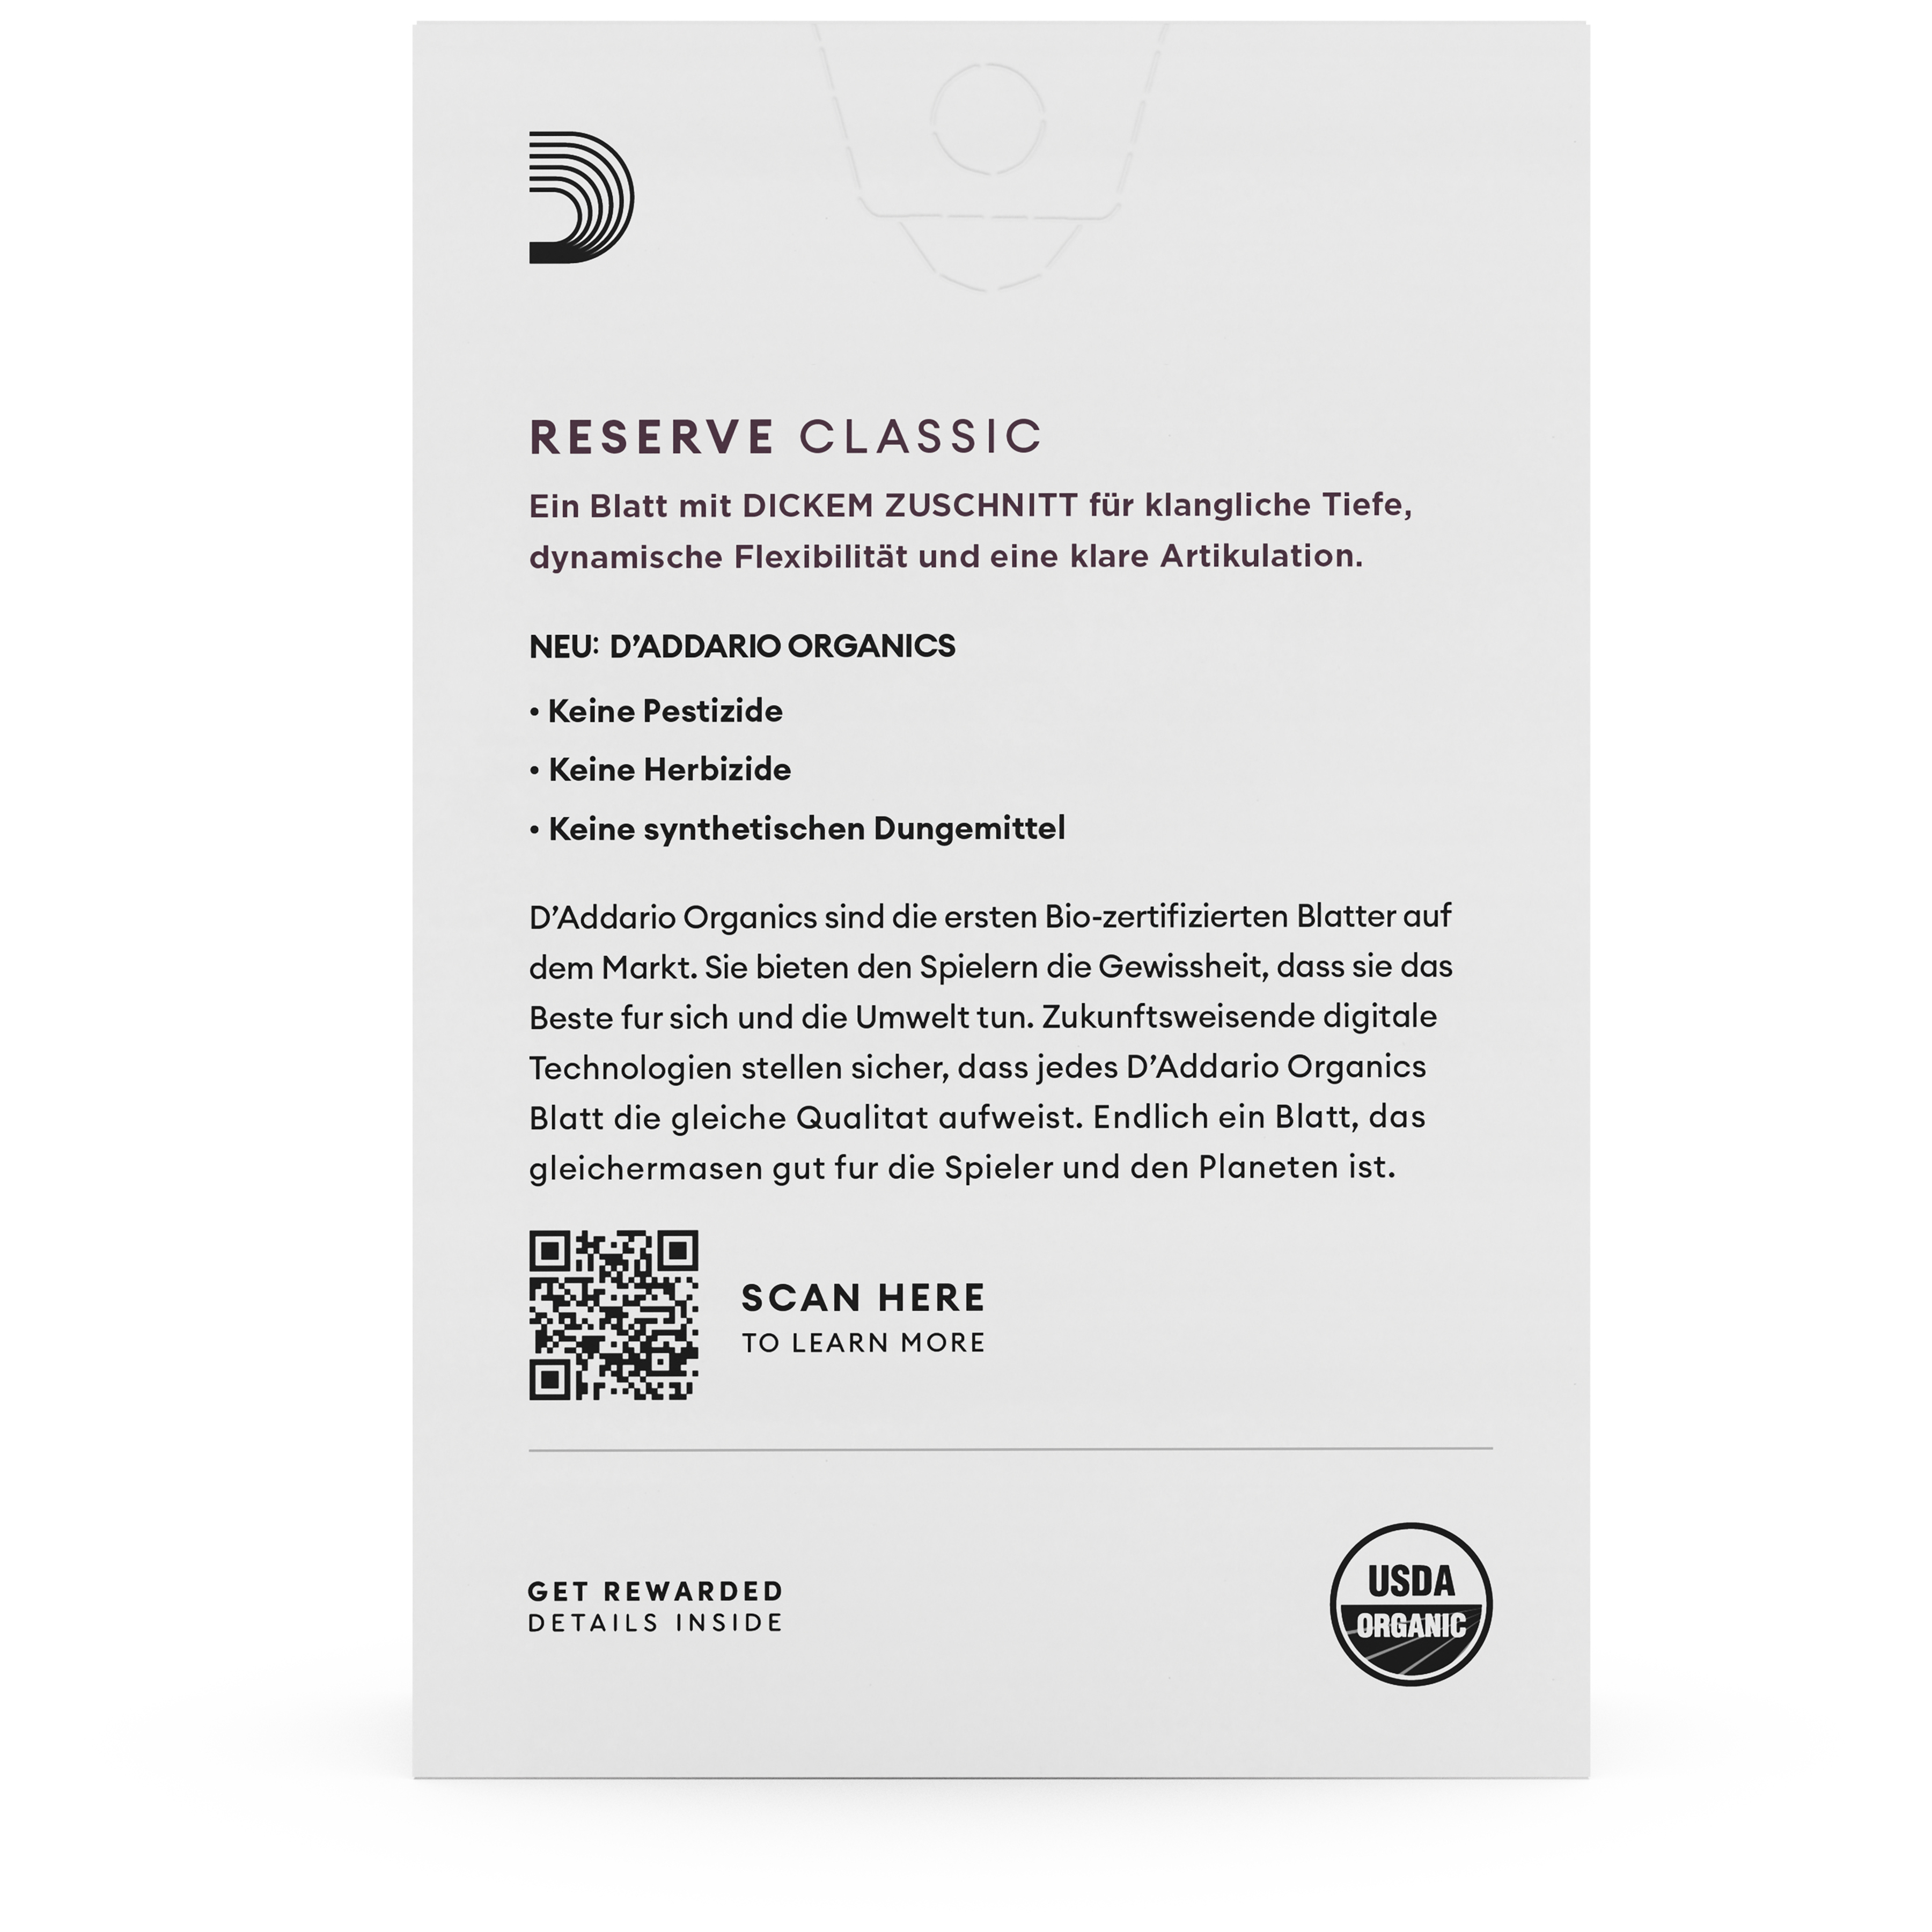 D’Addario Woodwinds Organic Reserve Classic German - Deutsche Klarinette 2,0 - 10er Pack 2